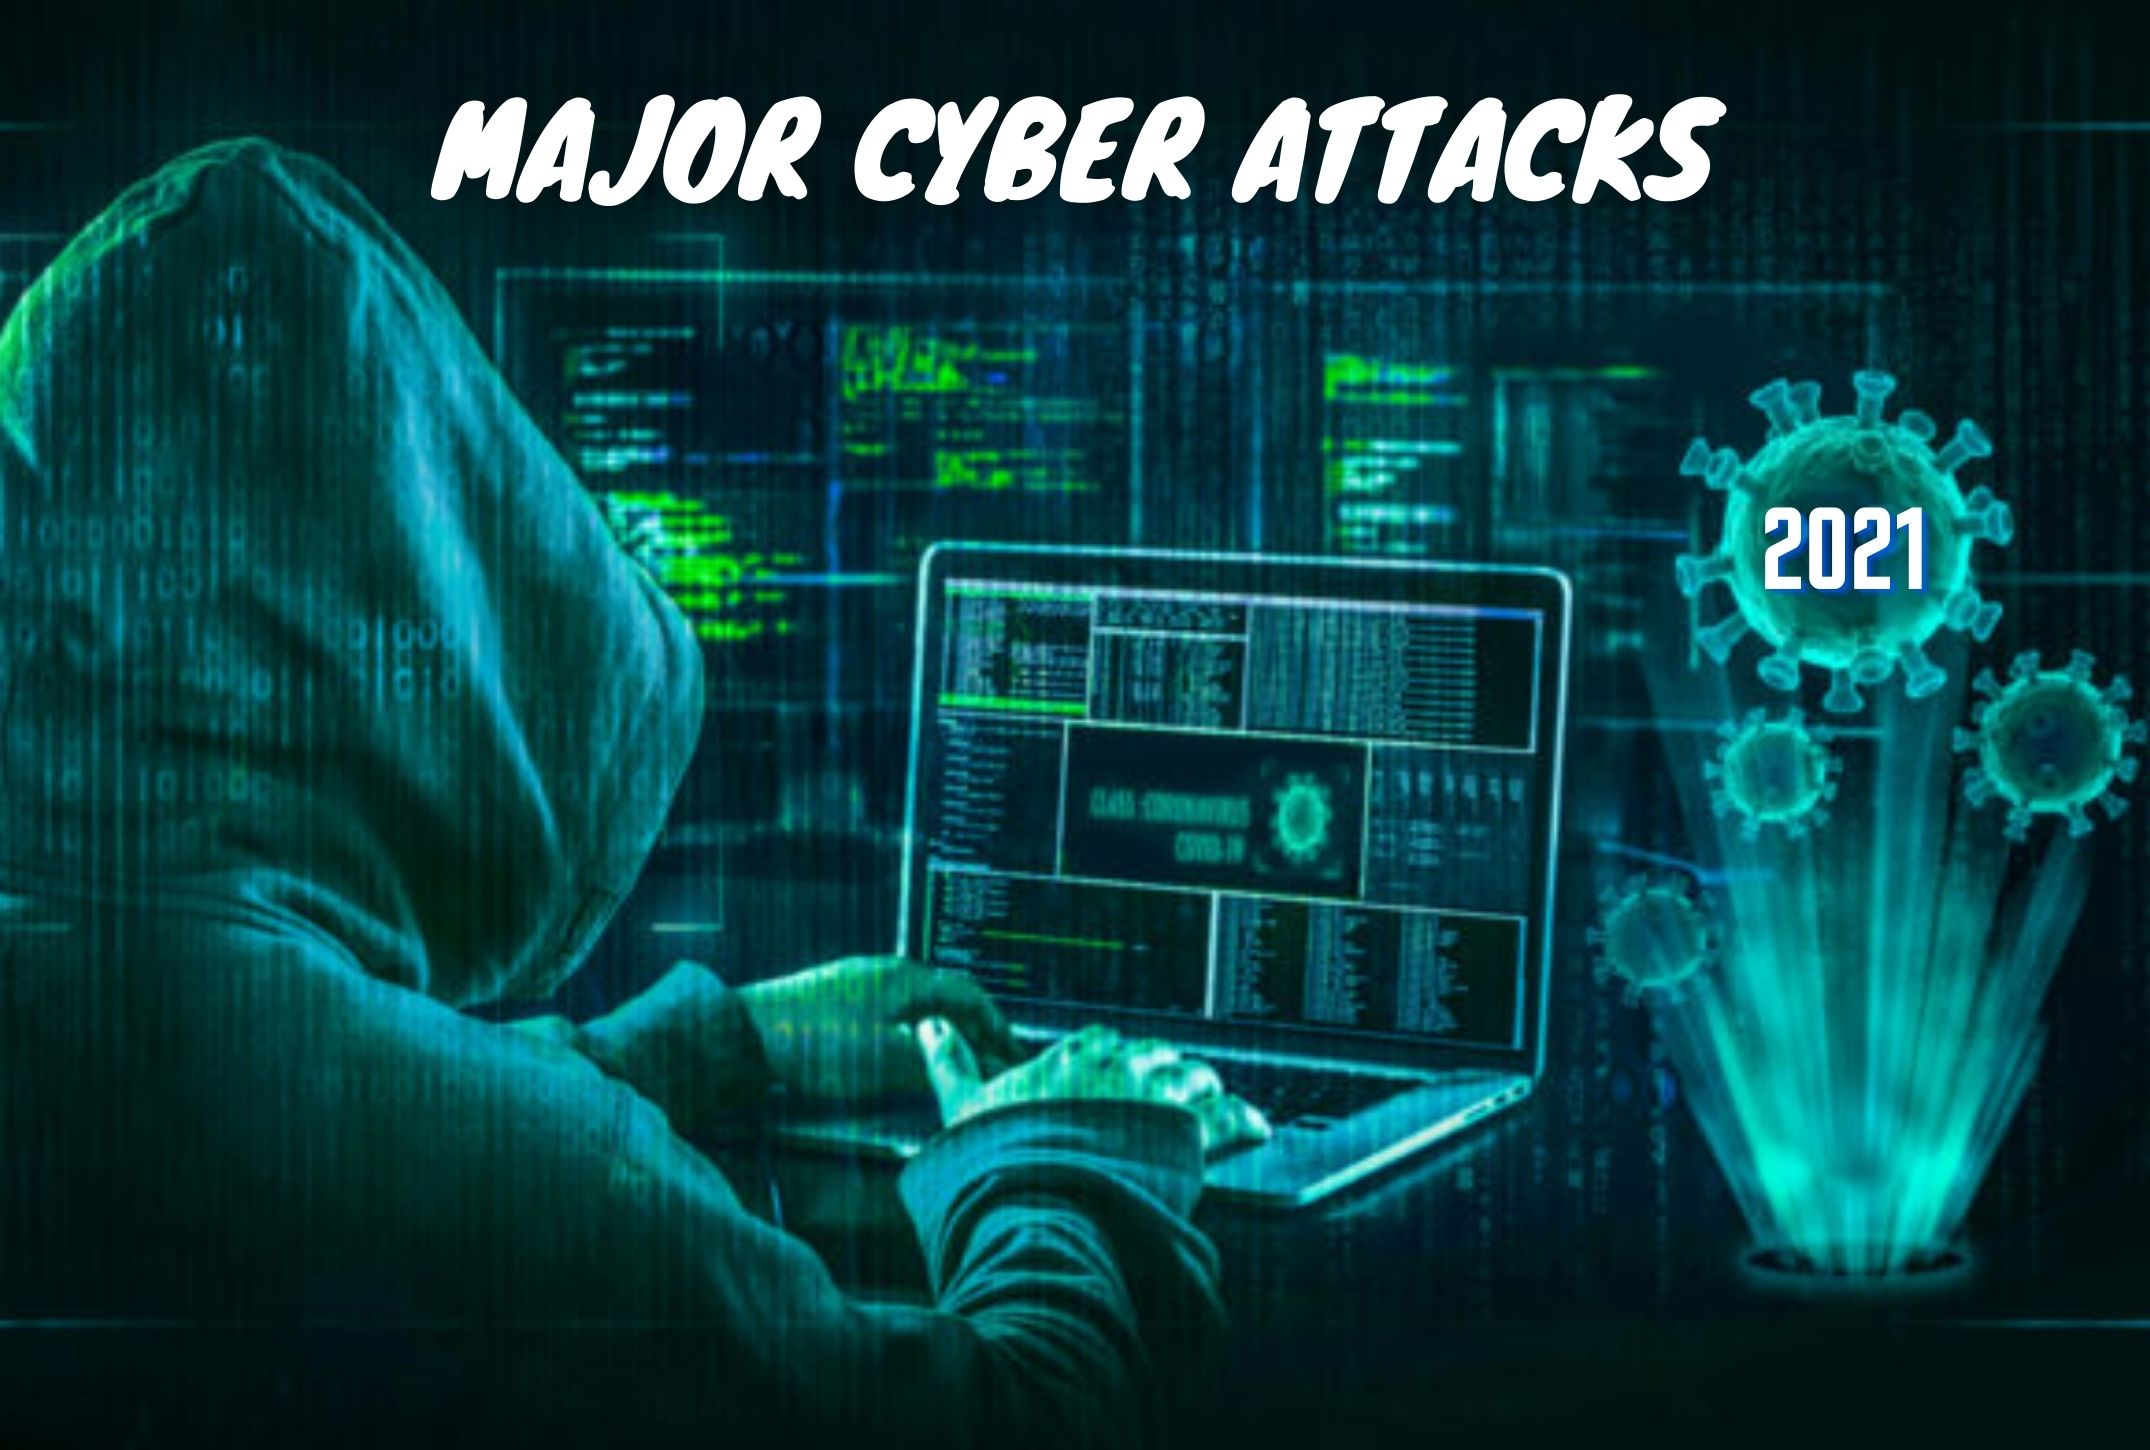 Major Cyber attacks evidenced globally in Q1 2021